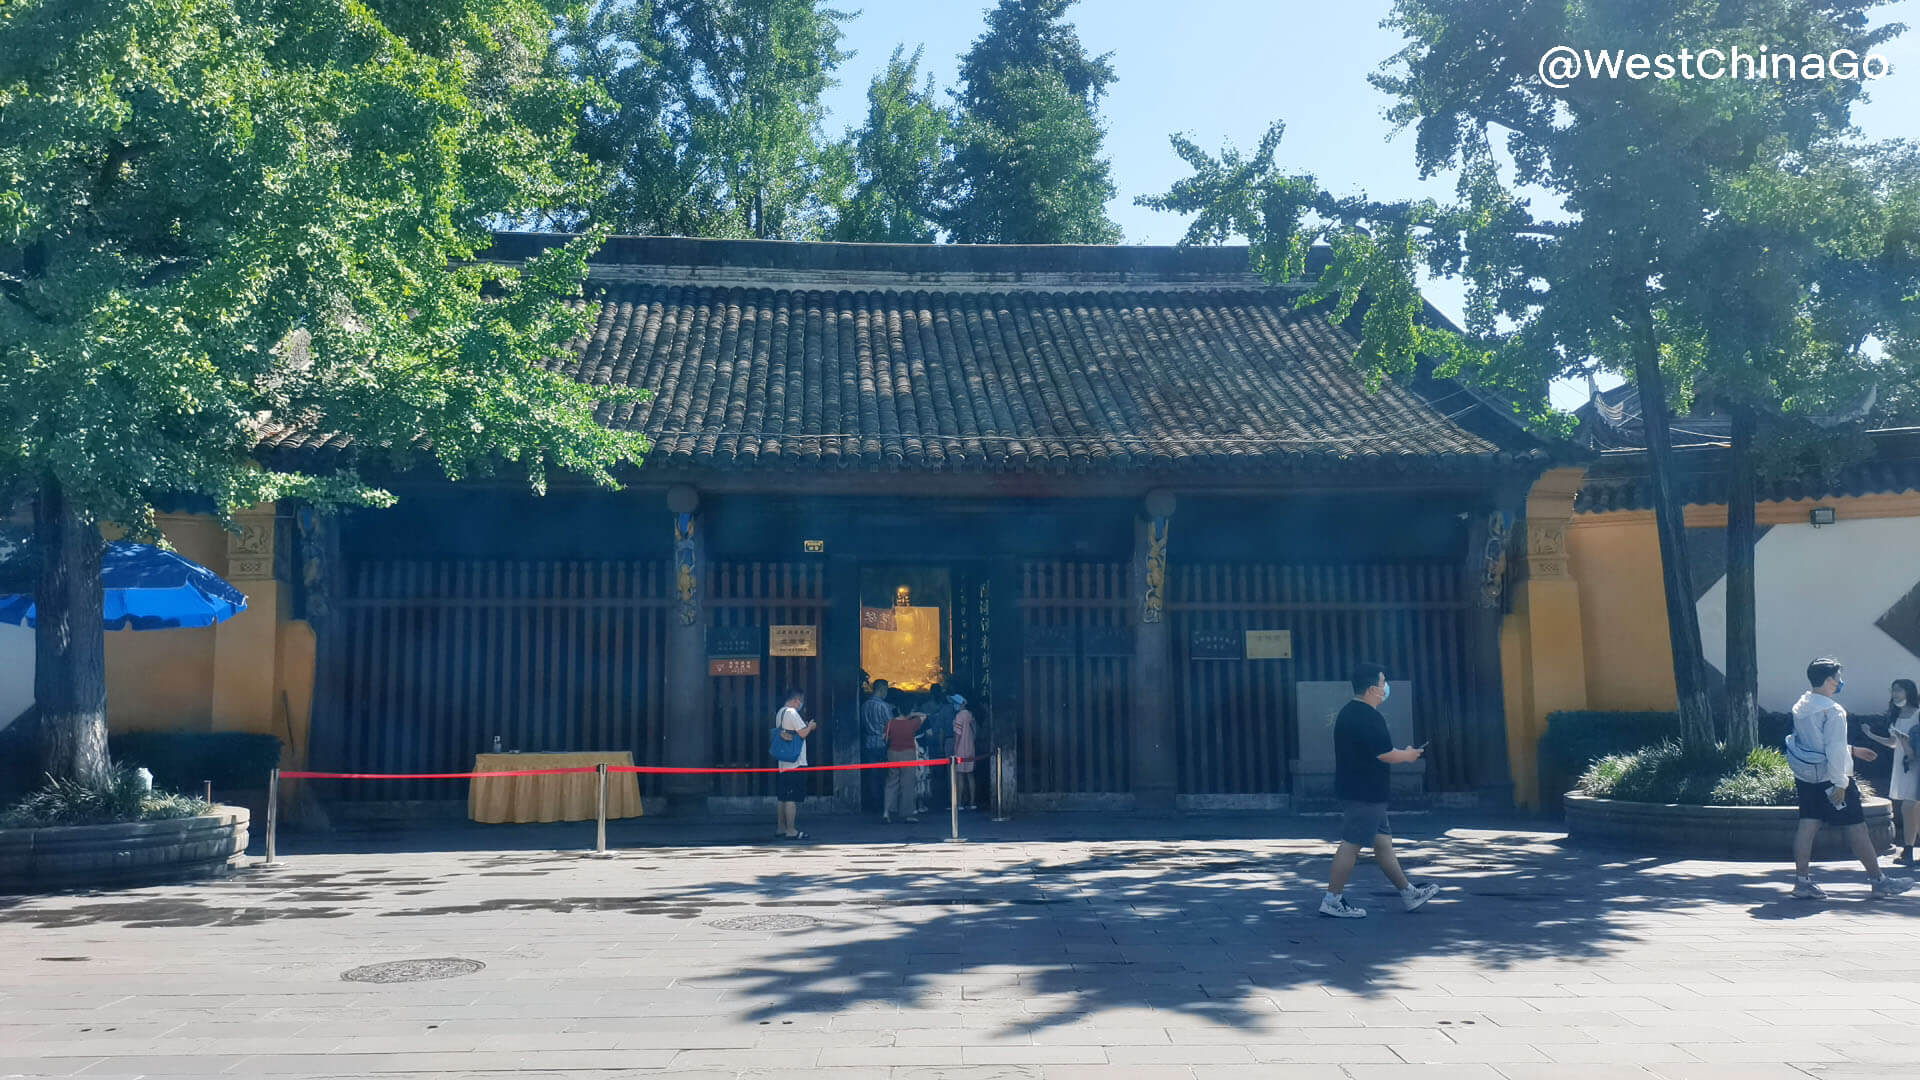 ChengDu WenShuYuan Monastery